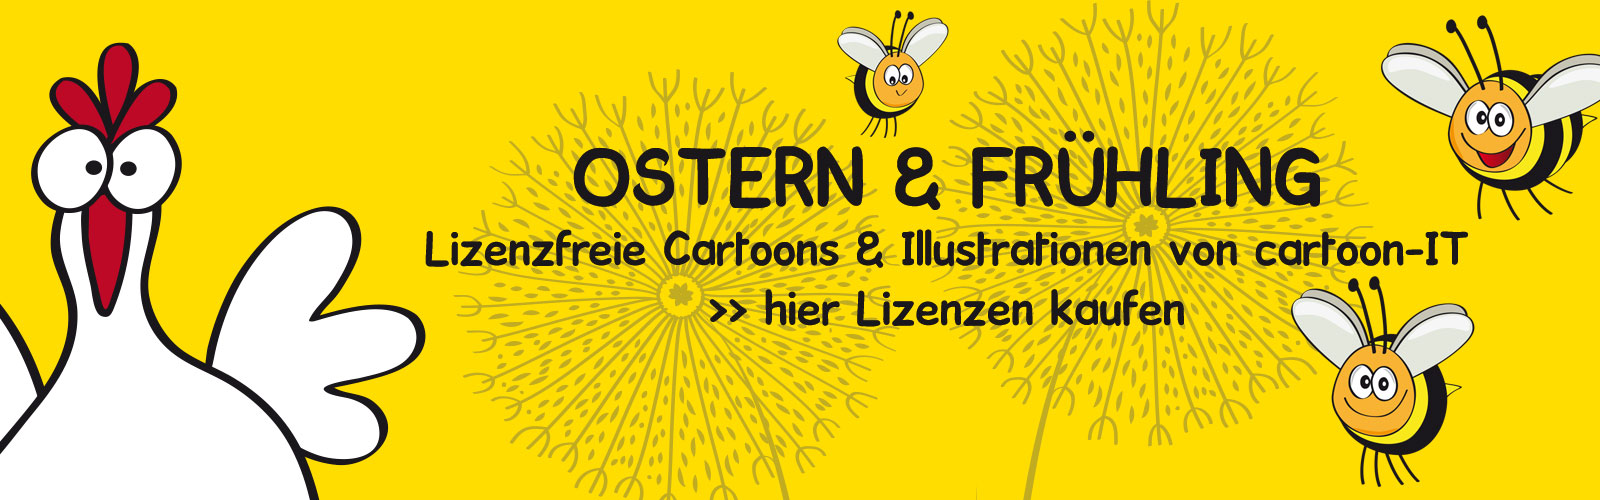 Lizenzfreie Cartoons & Illustrationen OSTERN